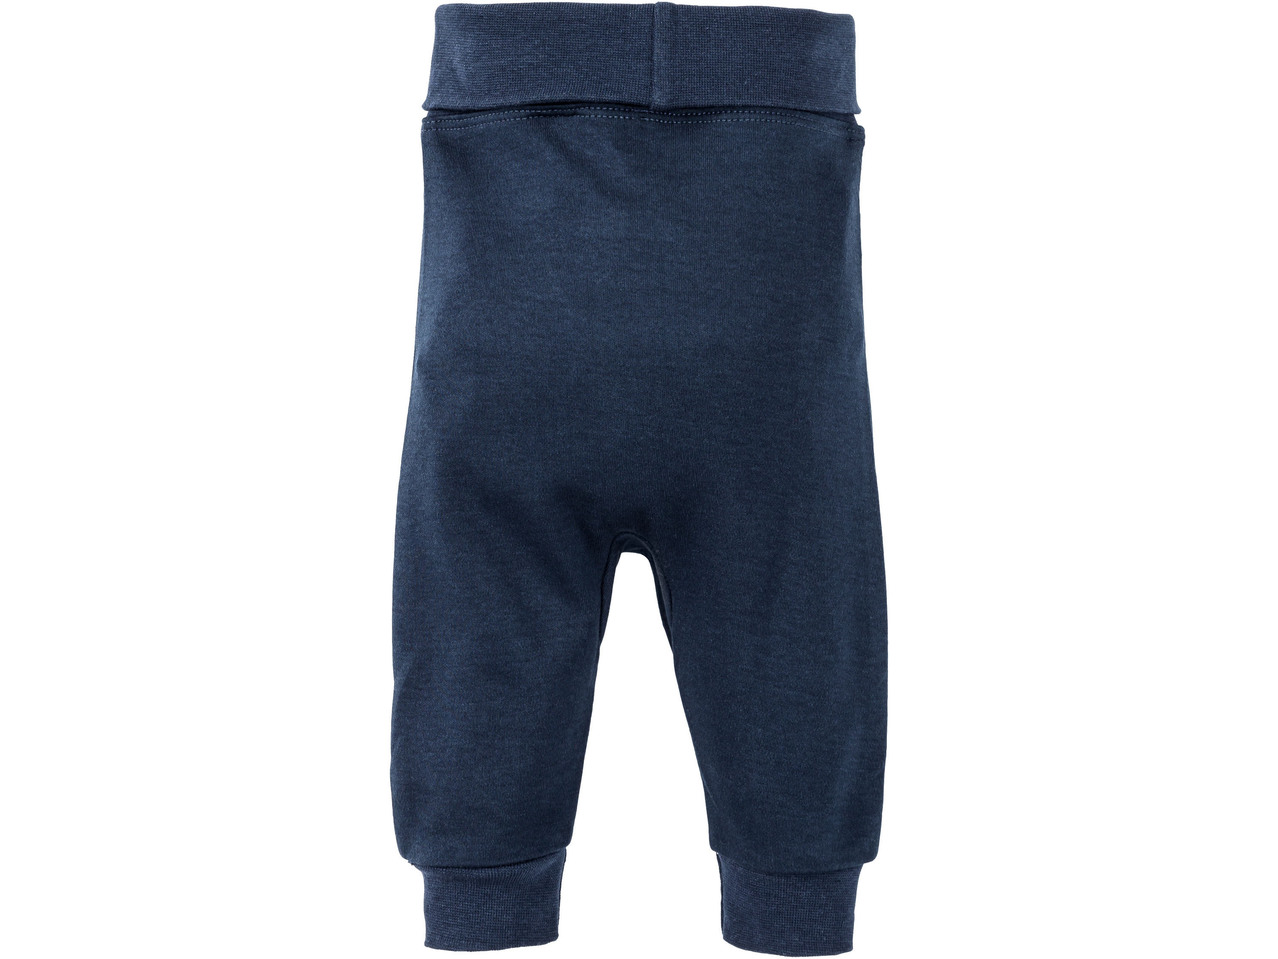 Pantaloni sportivi per neonati, 2 pezzi